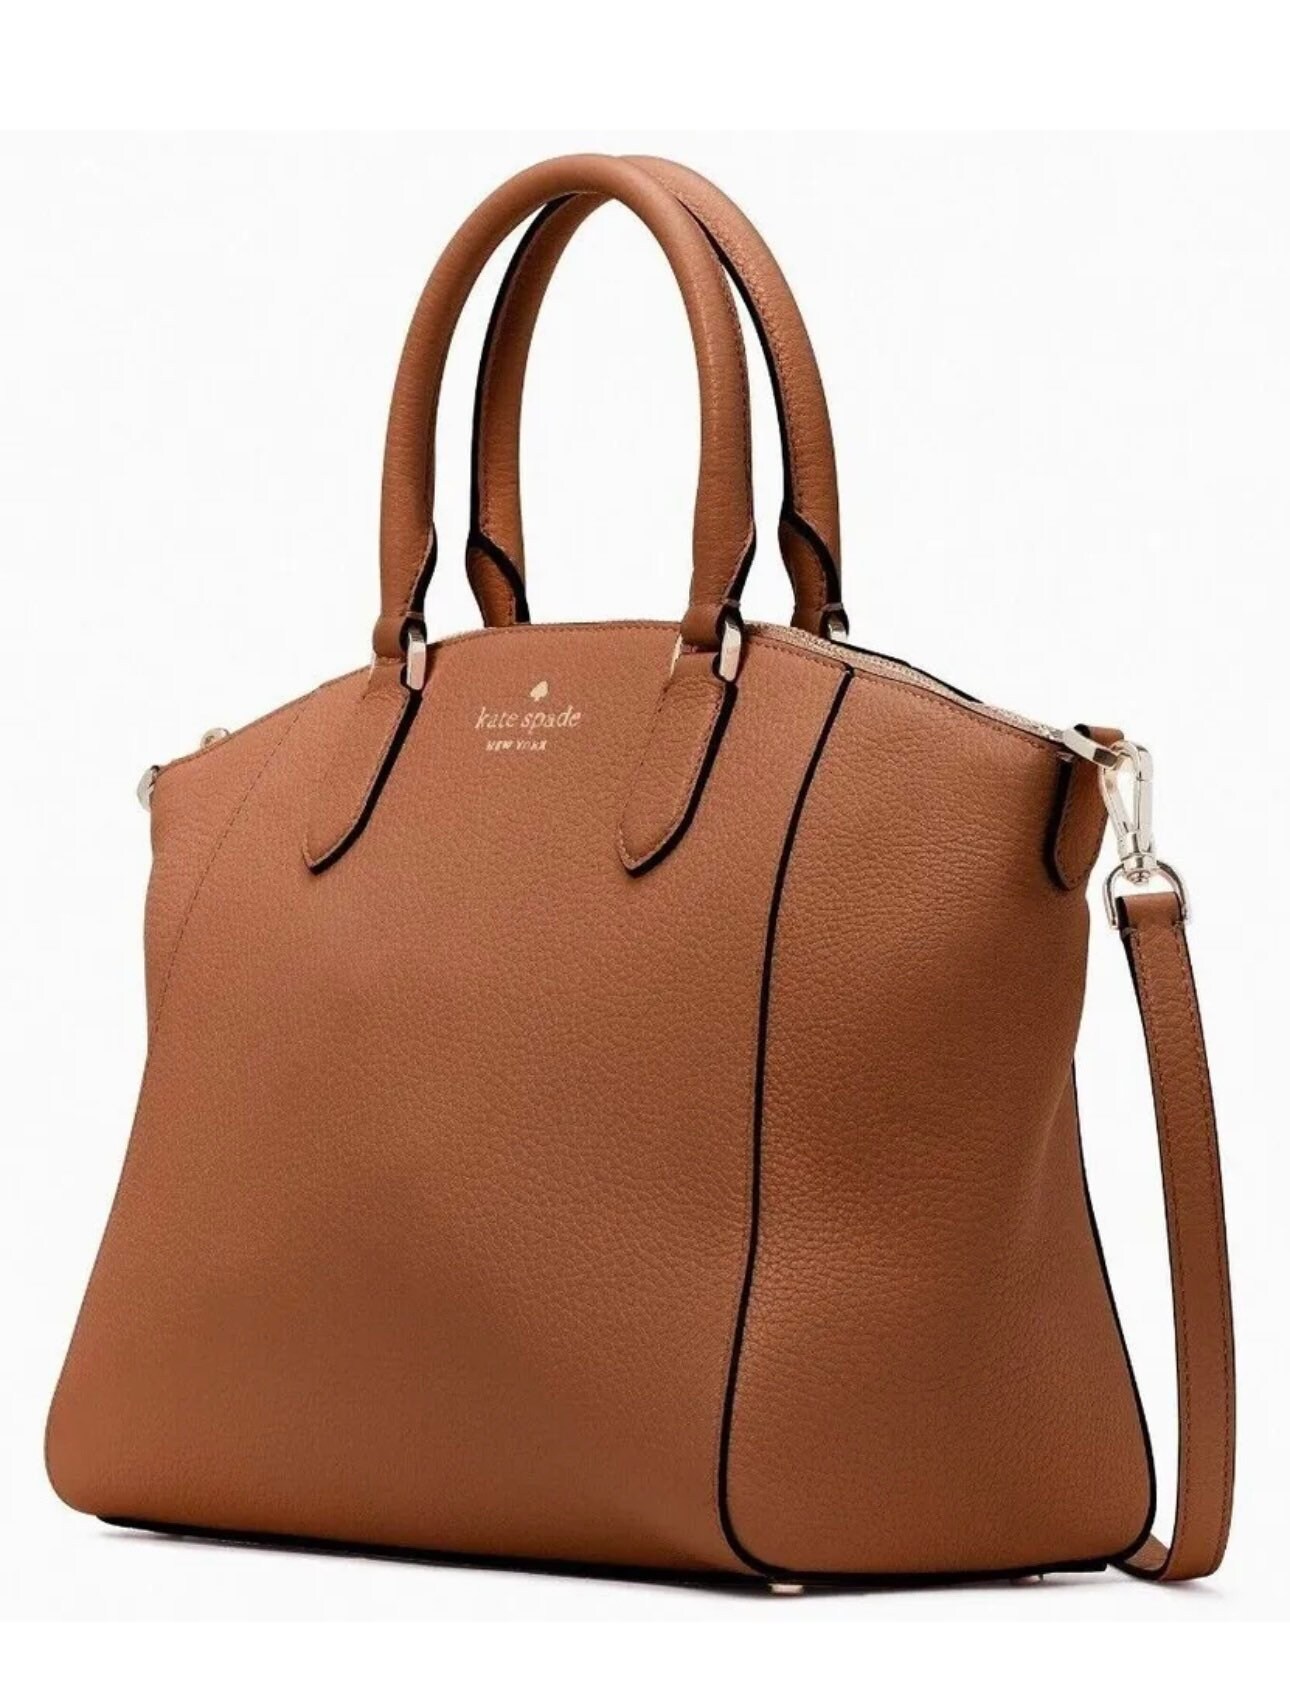 Kate Spade Purse | Leather shoulder handbags, Kate spade purse, White kate  spade bag